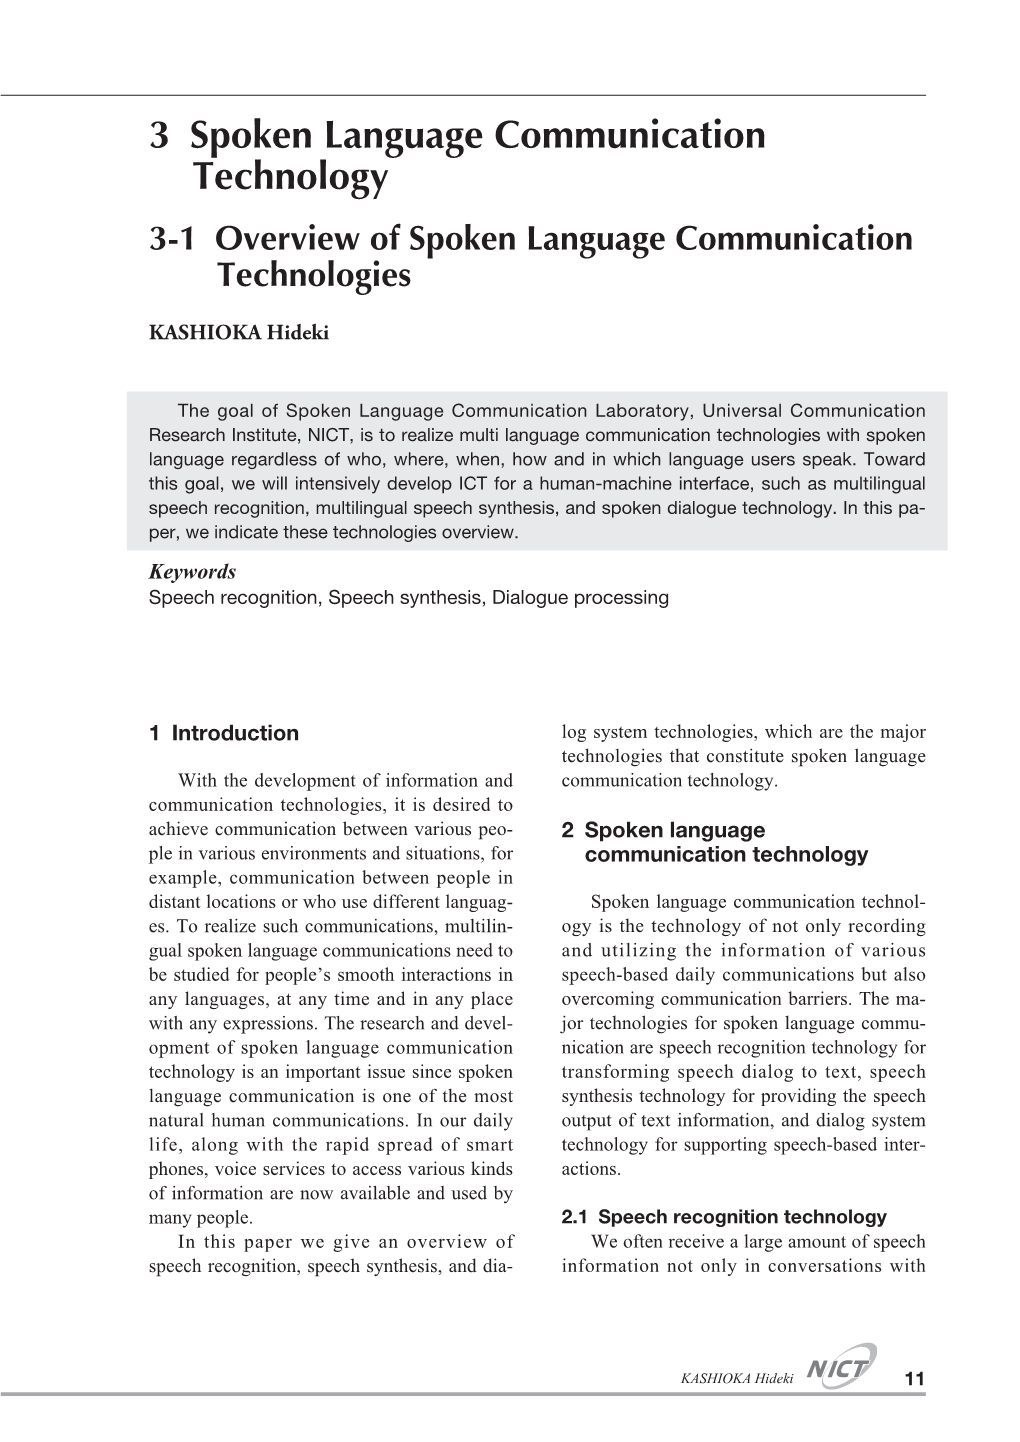 Overview of Spoken Language Communication Technologies